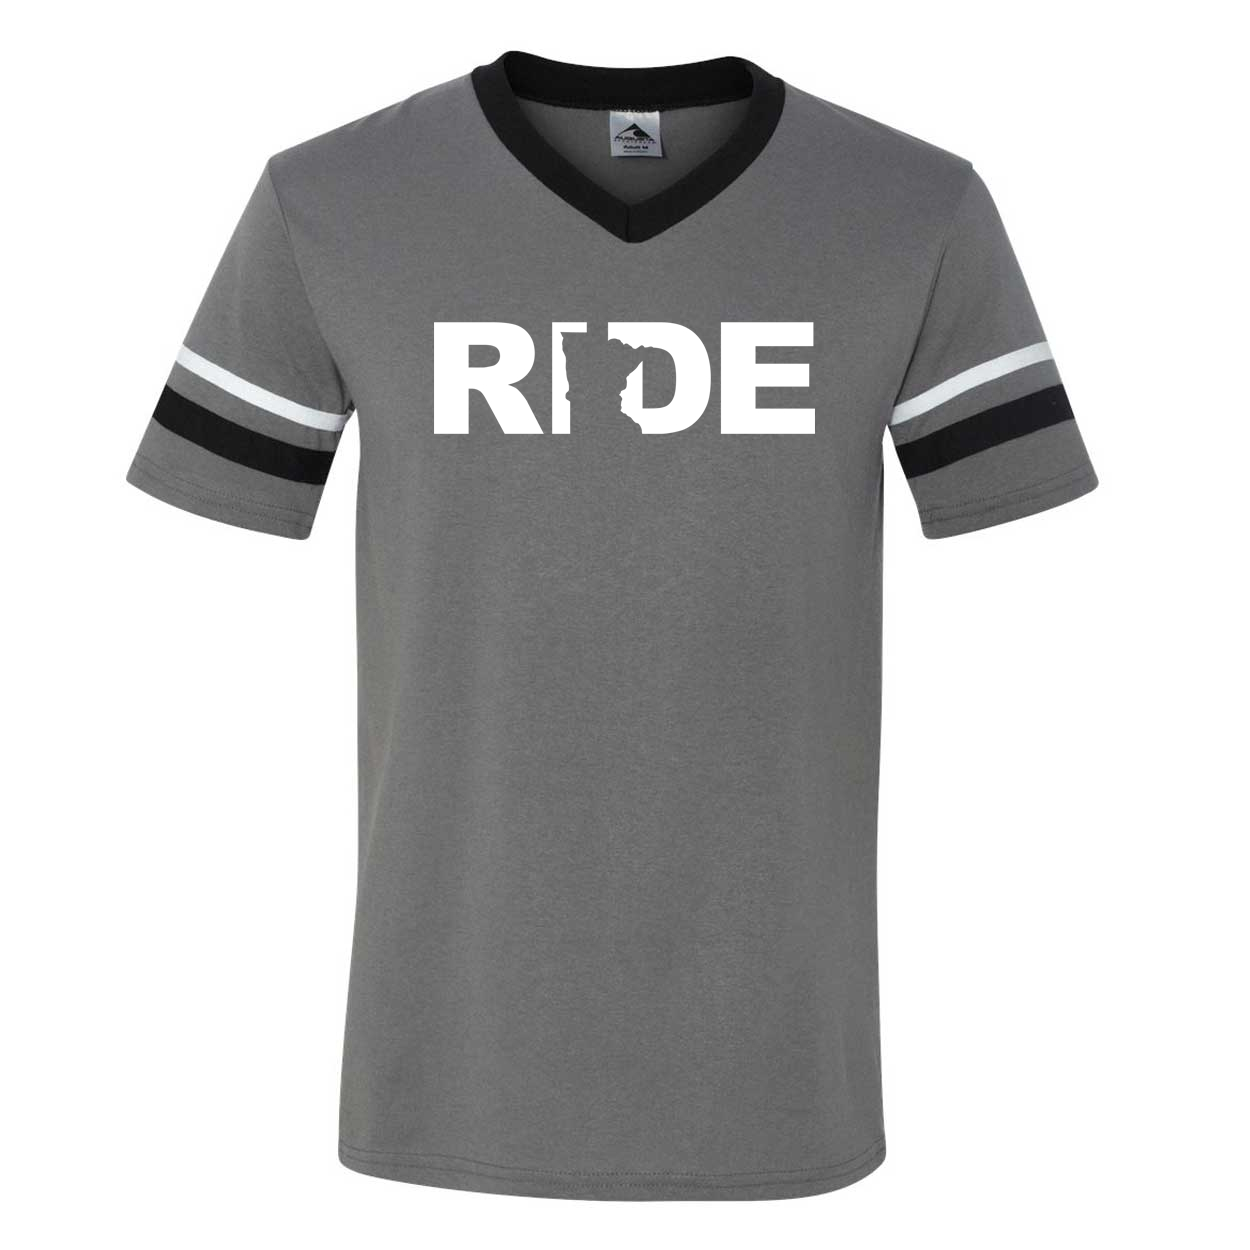 Ride Minnesota Classic Premium Striped Jersey T-Shirt Graphite/Black/White